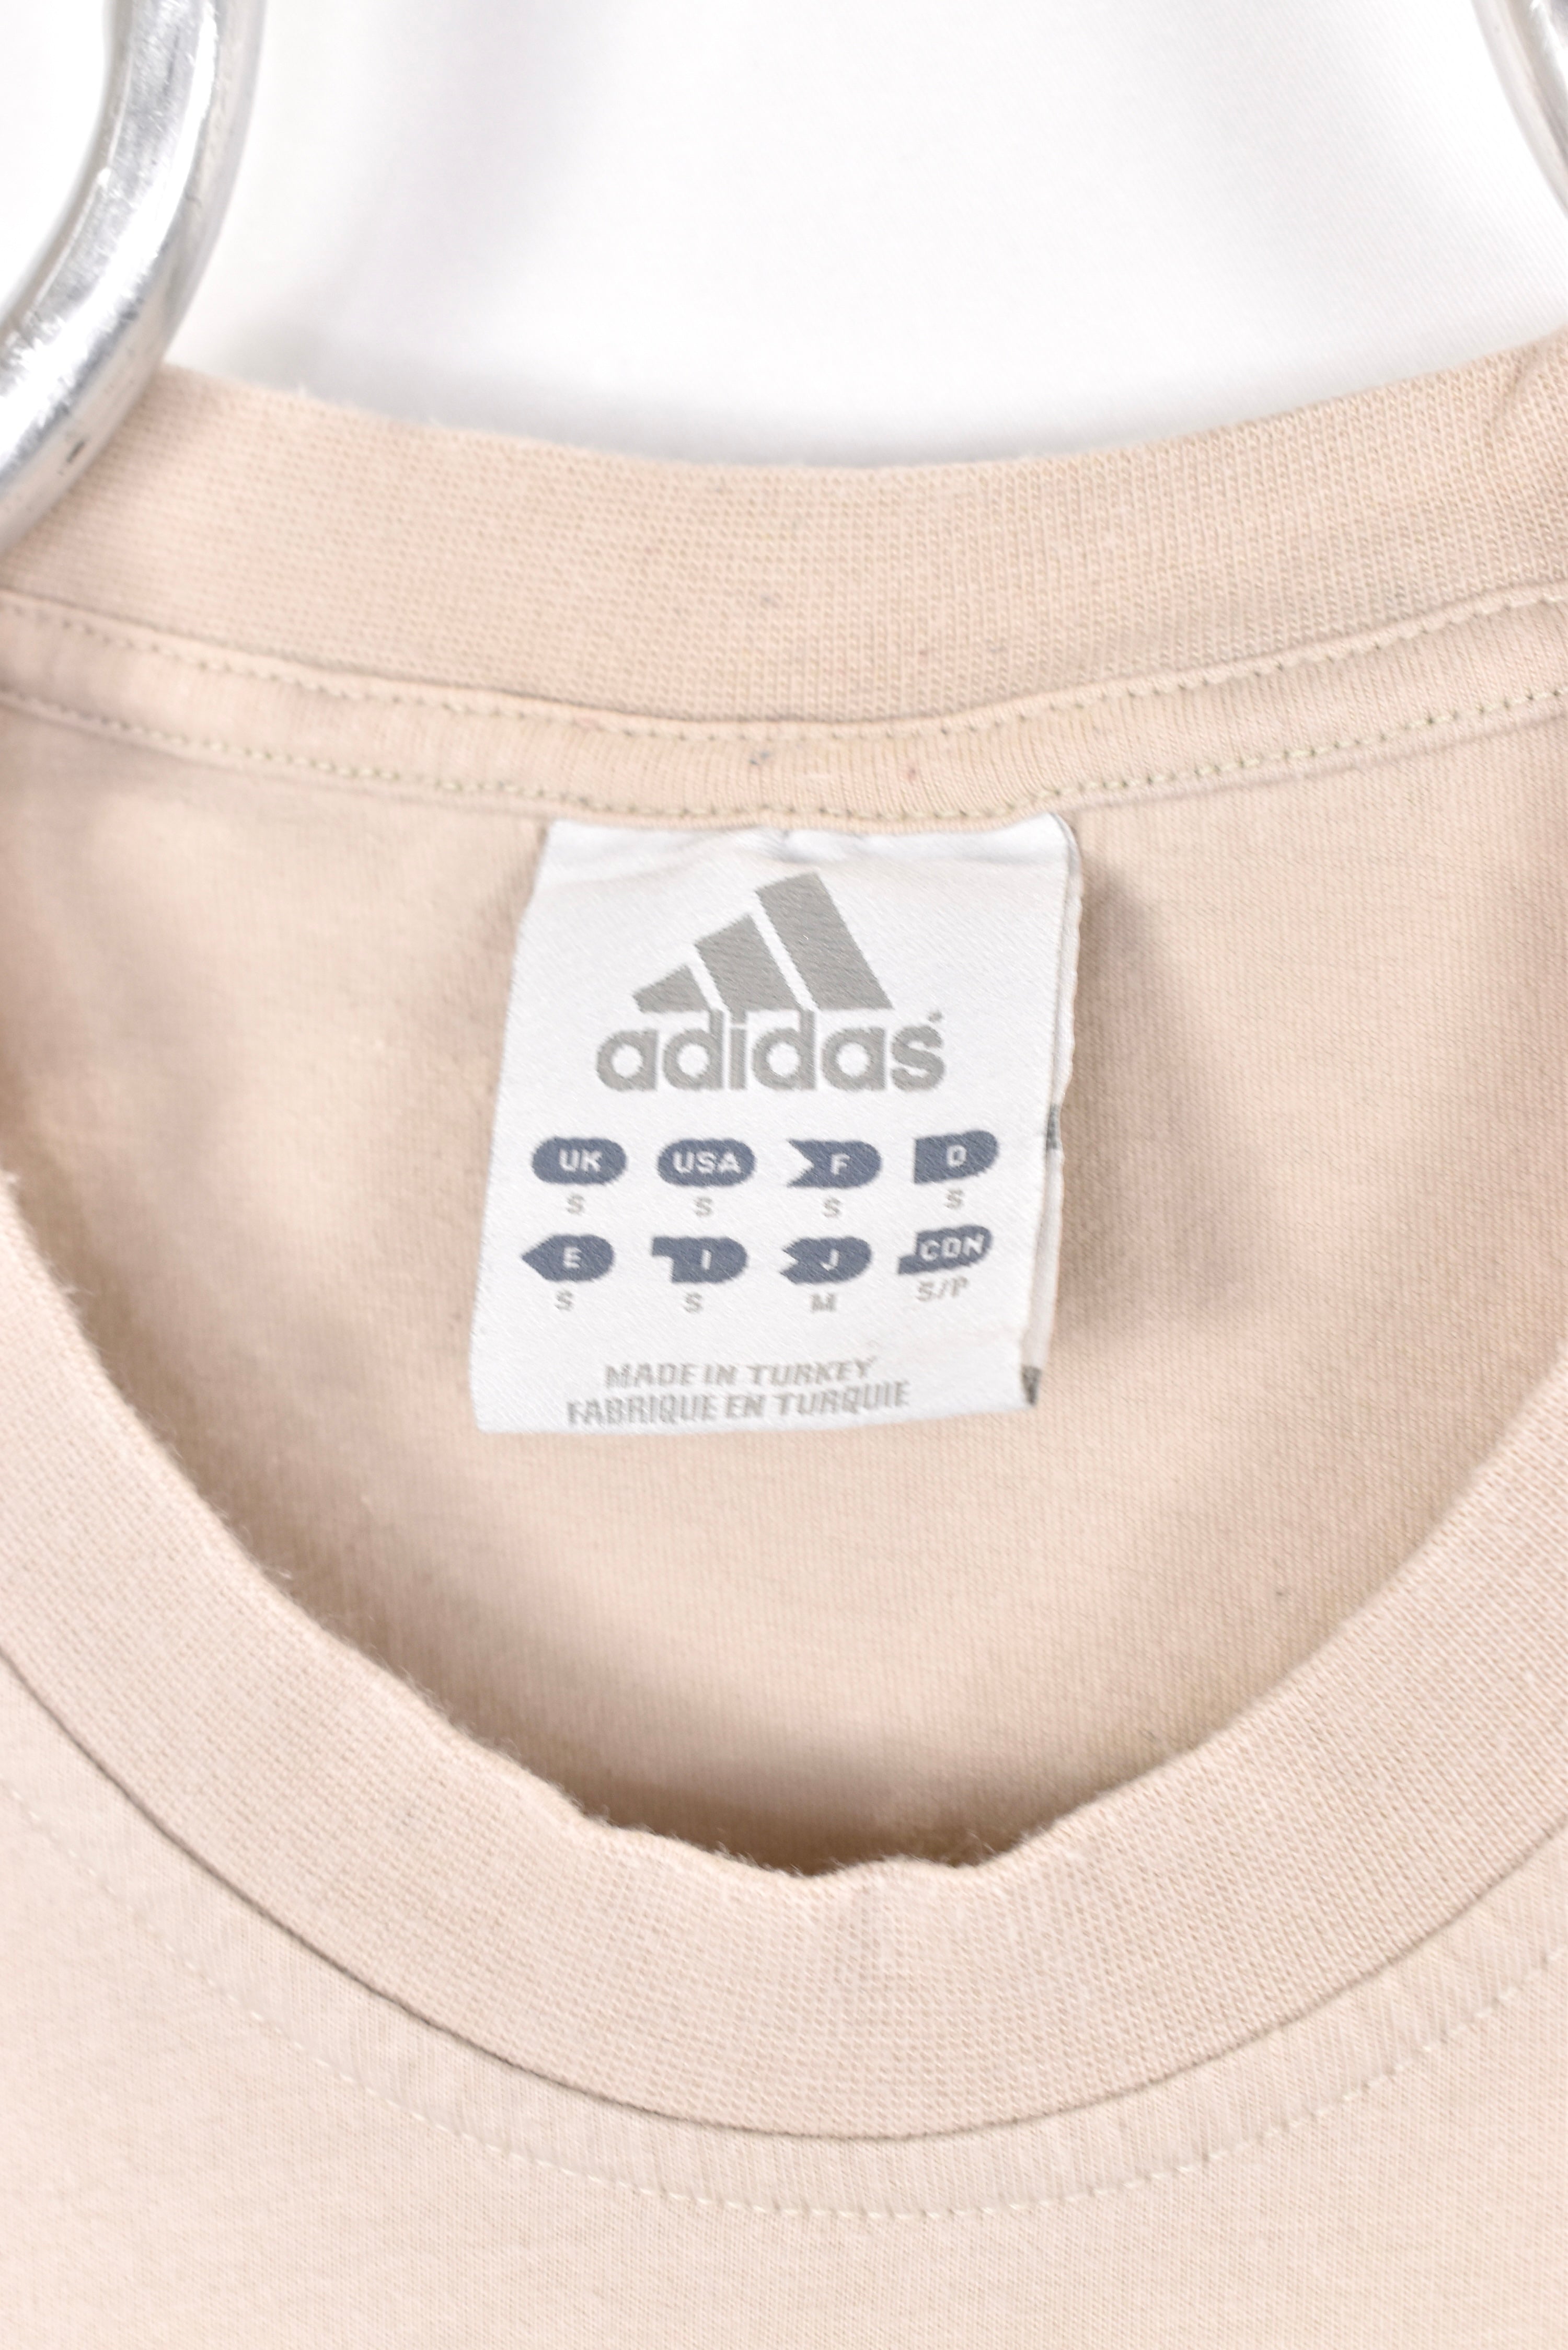 Vintage Adidas shirt, cream graphic tee - AU Small ADIDAS